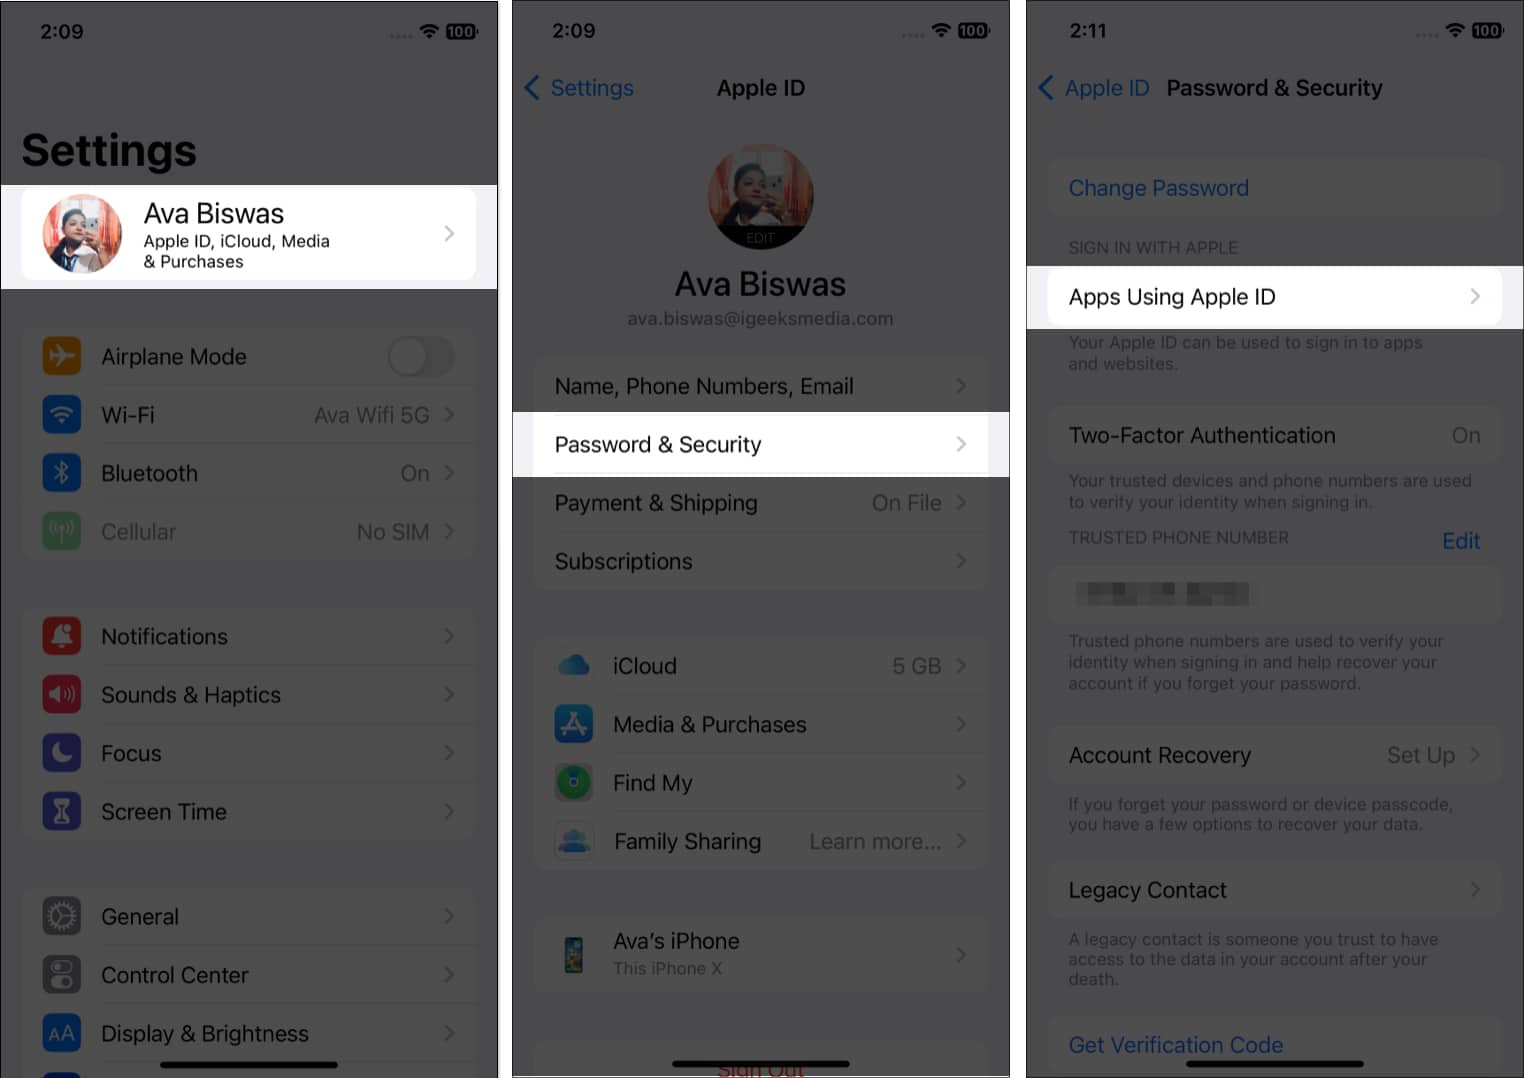 Tap on Appls Using Apple ID on iPhone